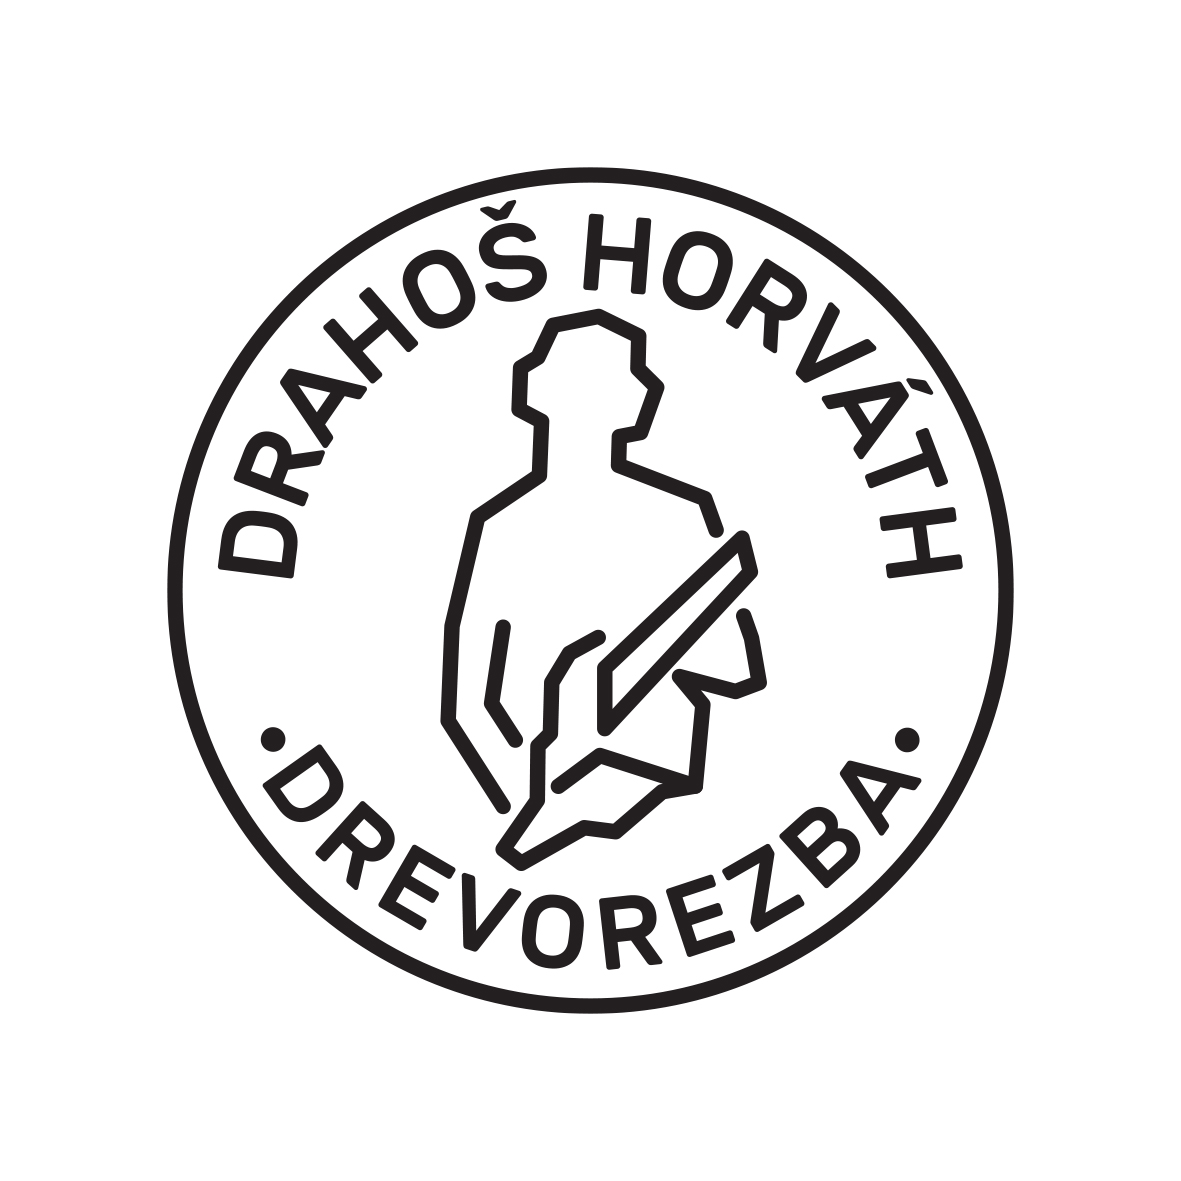 Drahos Horvath